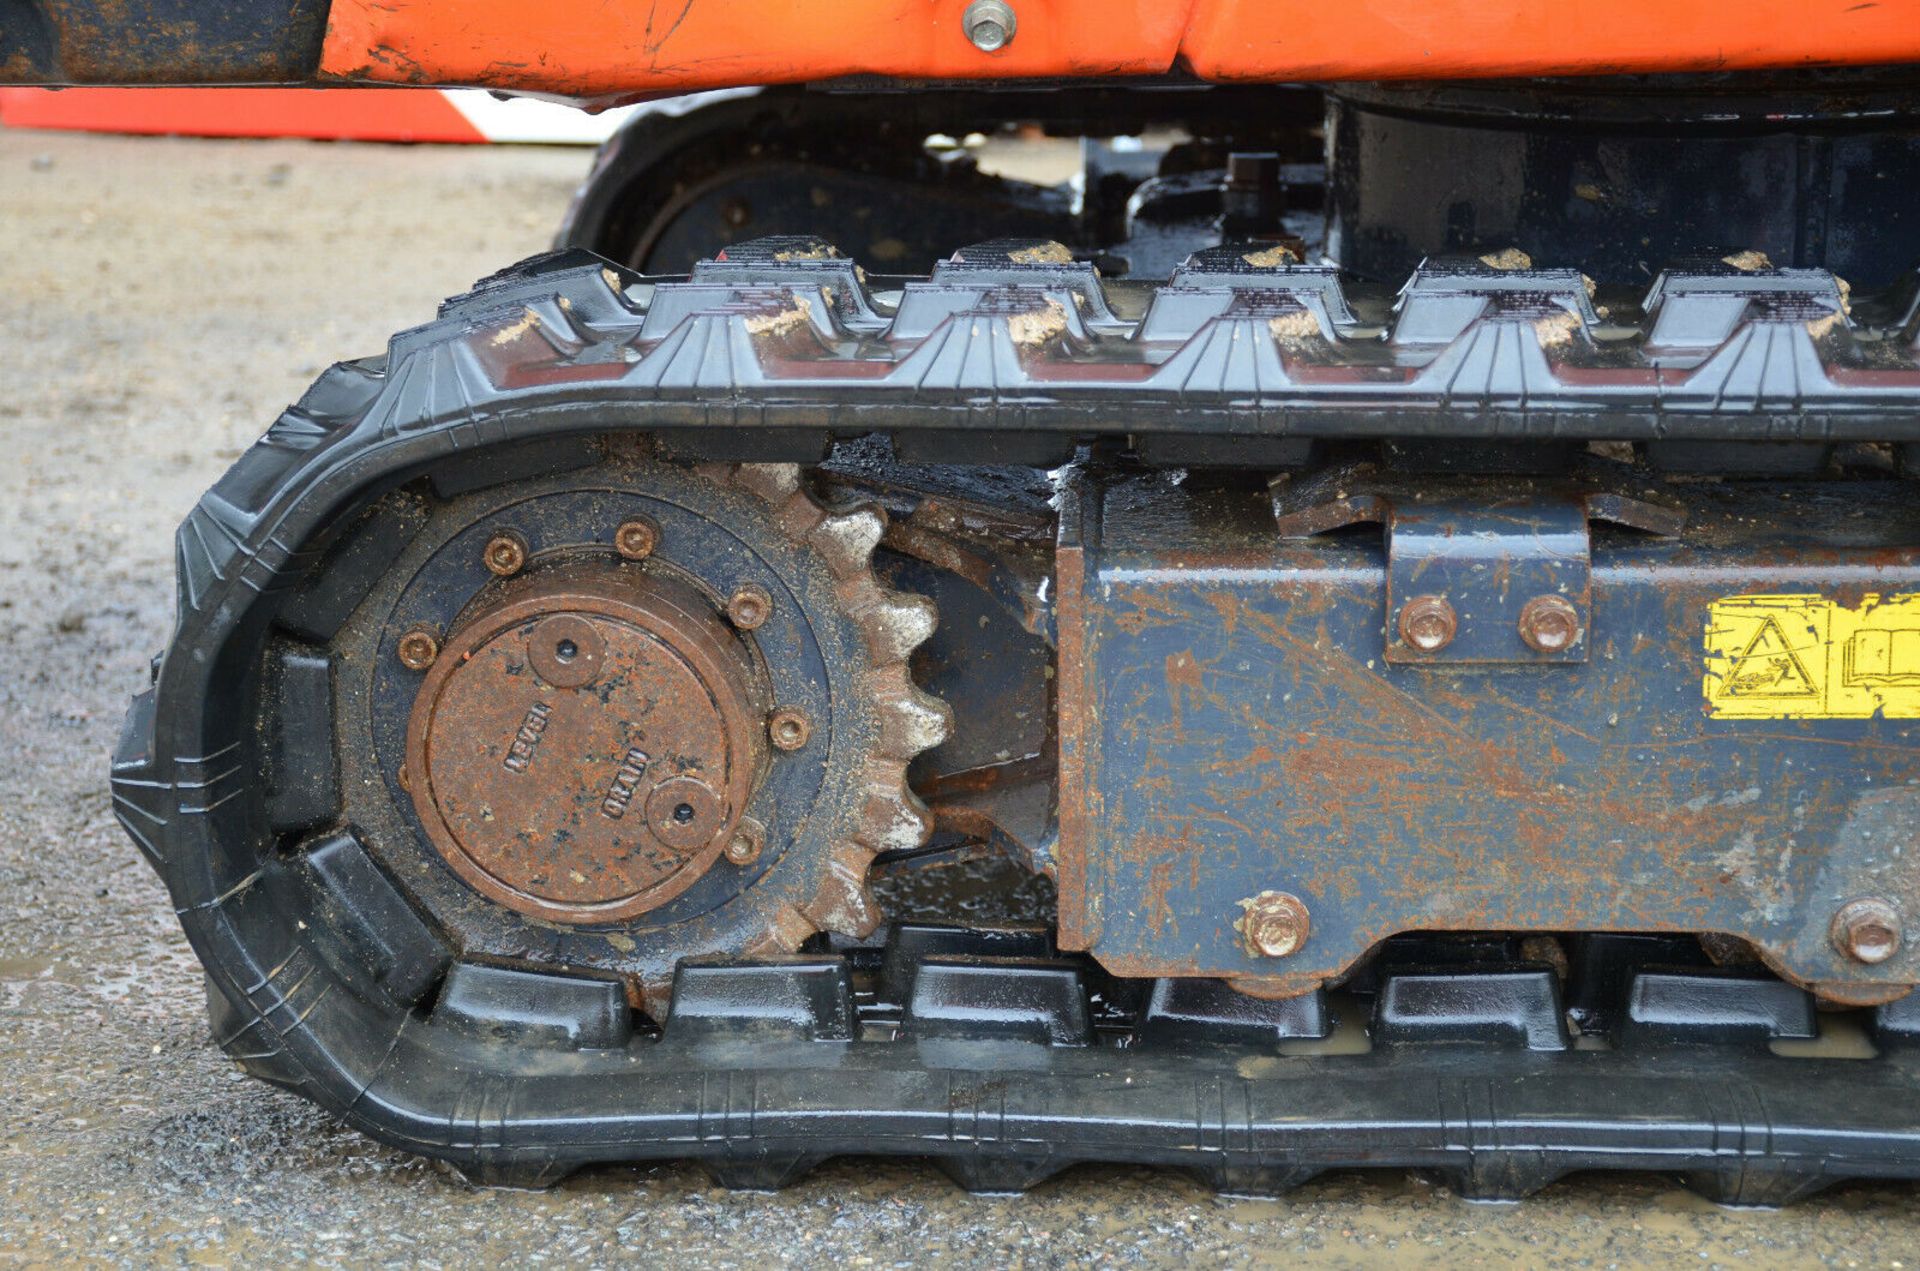 Kubot KX016-4 Mini Excavator 2014 - Image 9 of 12